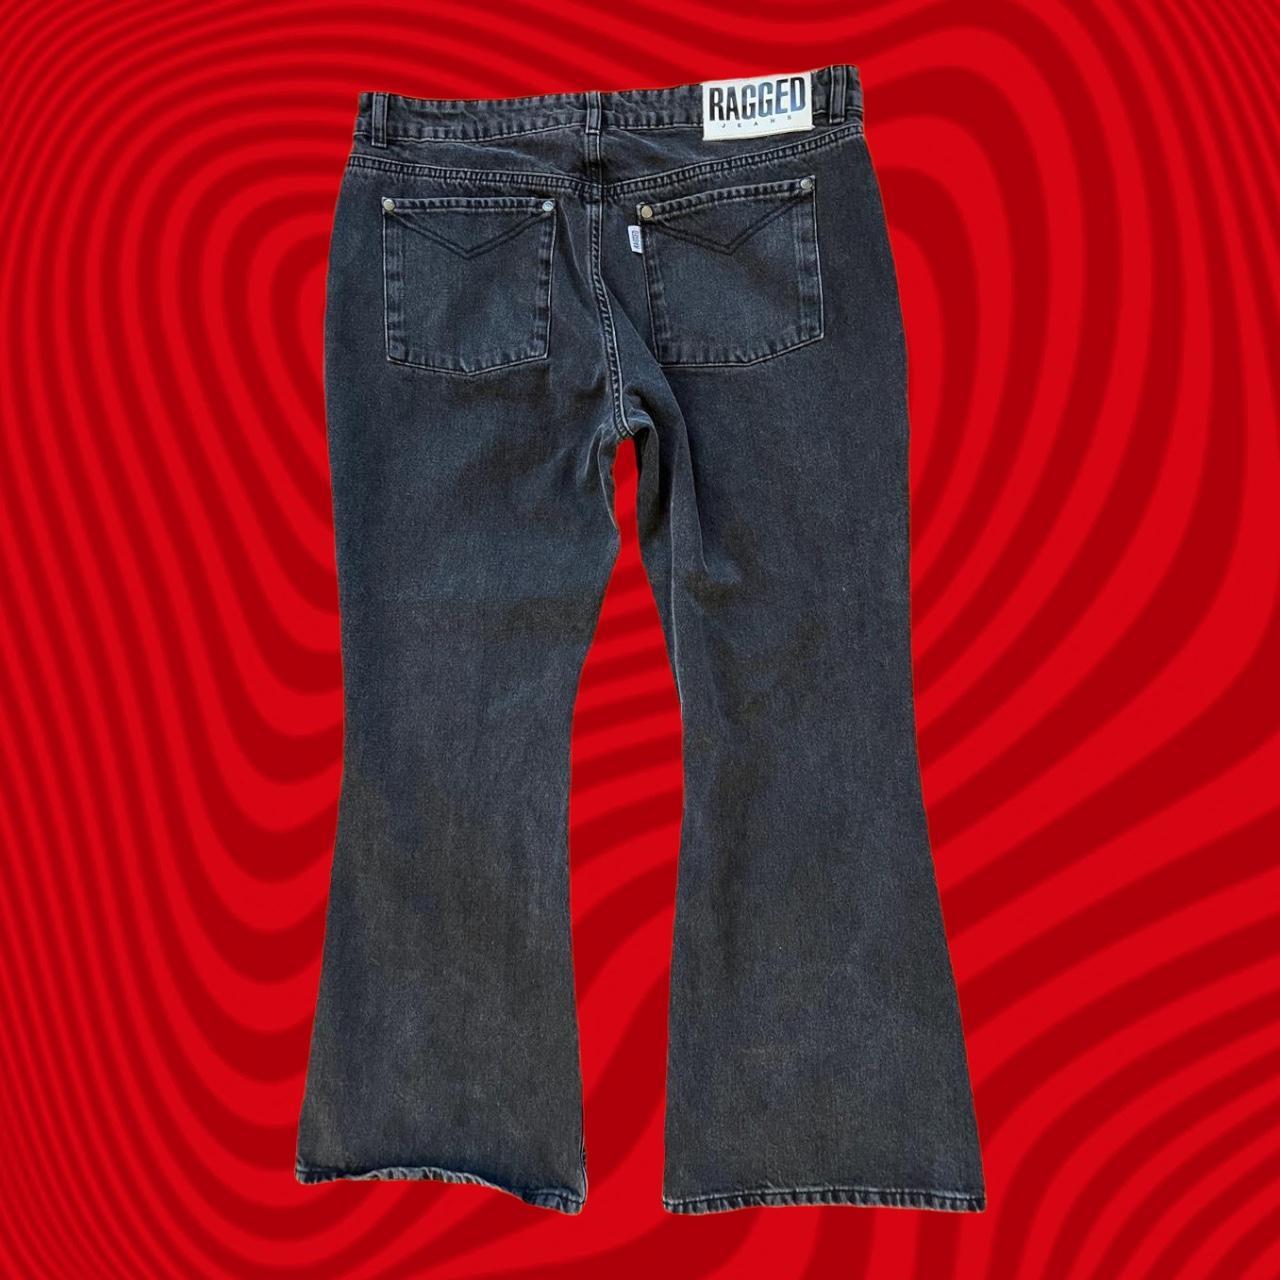 Product Image 4 - ✿Mid-rise wide-leg black denim jeans.
✿The